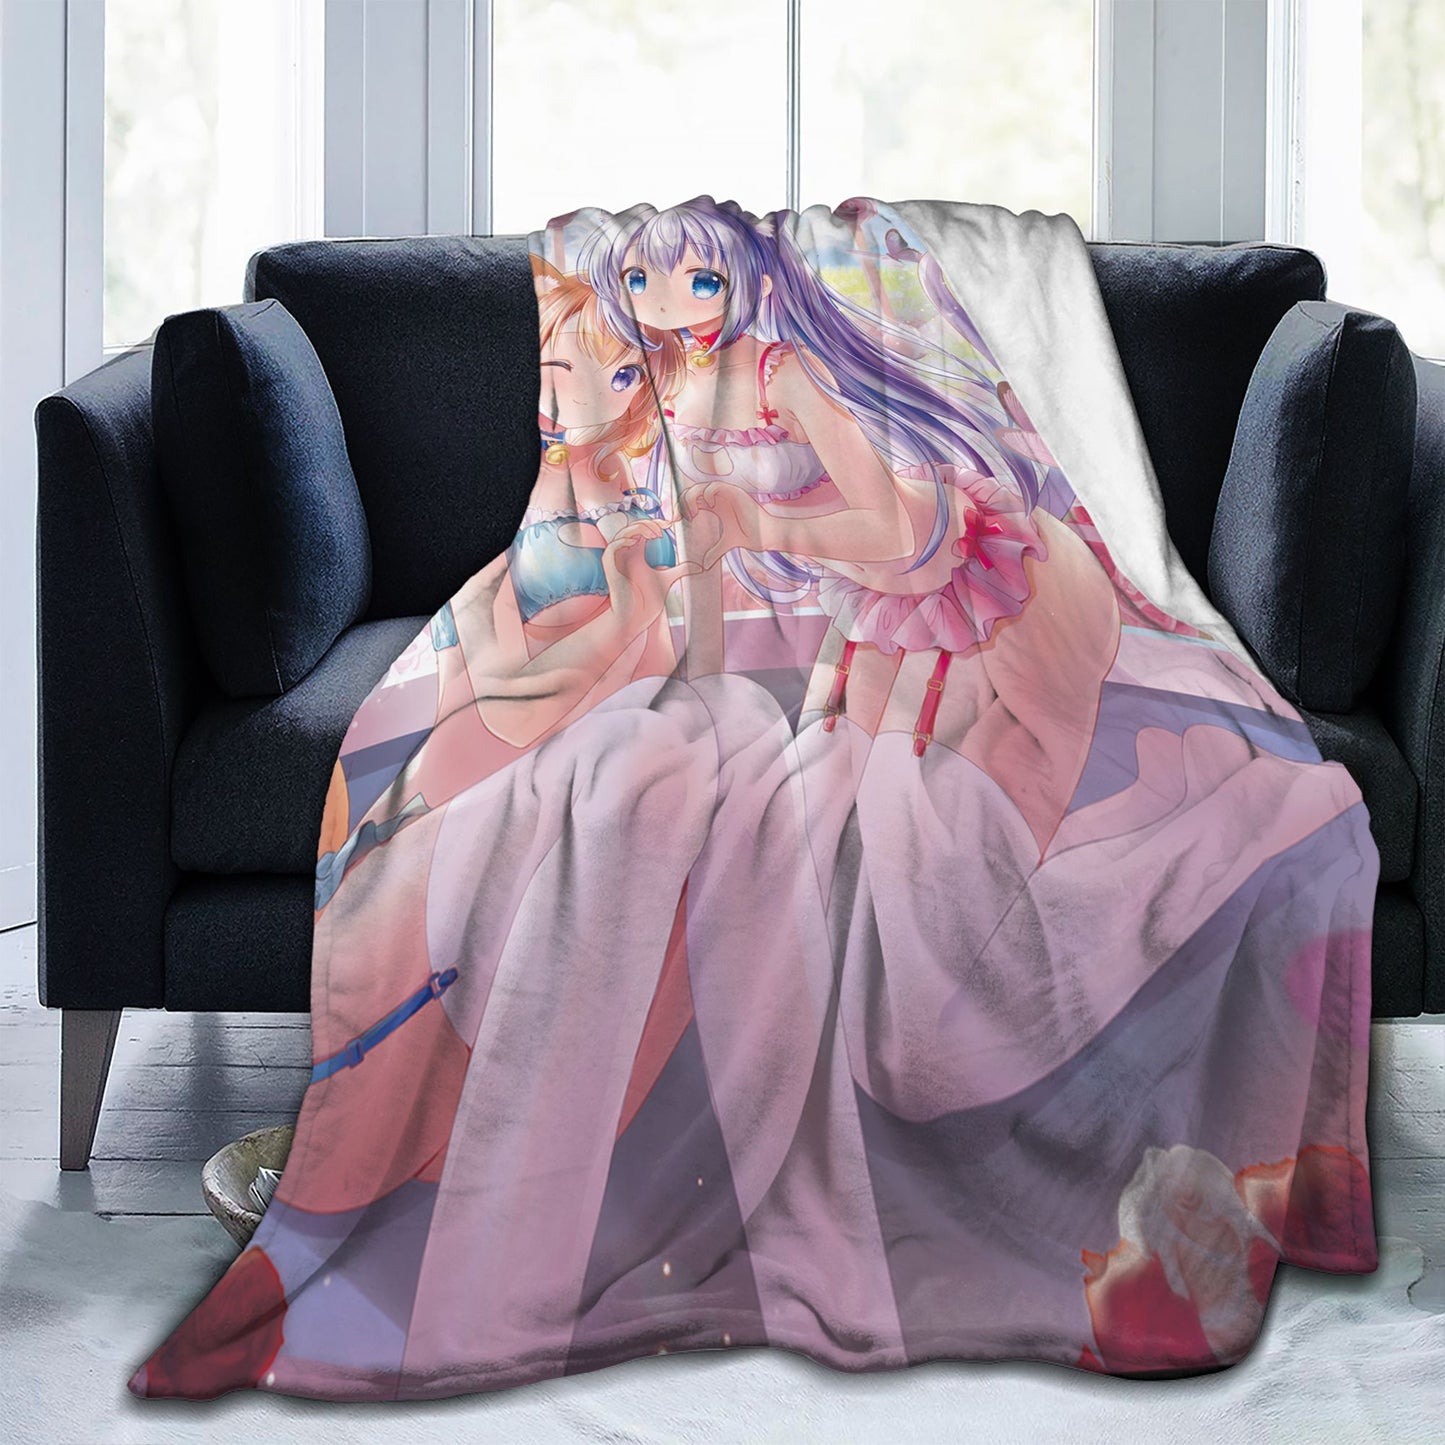 Japanese Hot Anime Cute Girl Modern Blanket Flannel Soft Plush Sofa Bed Throwing Cartoon Blankets Otaku Waifu Gift for Bed Decor